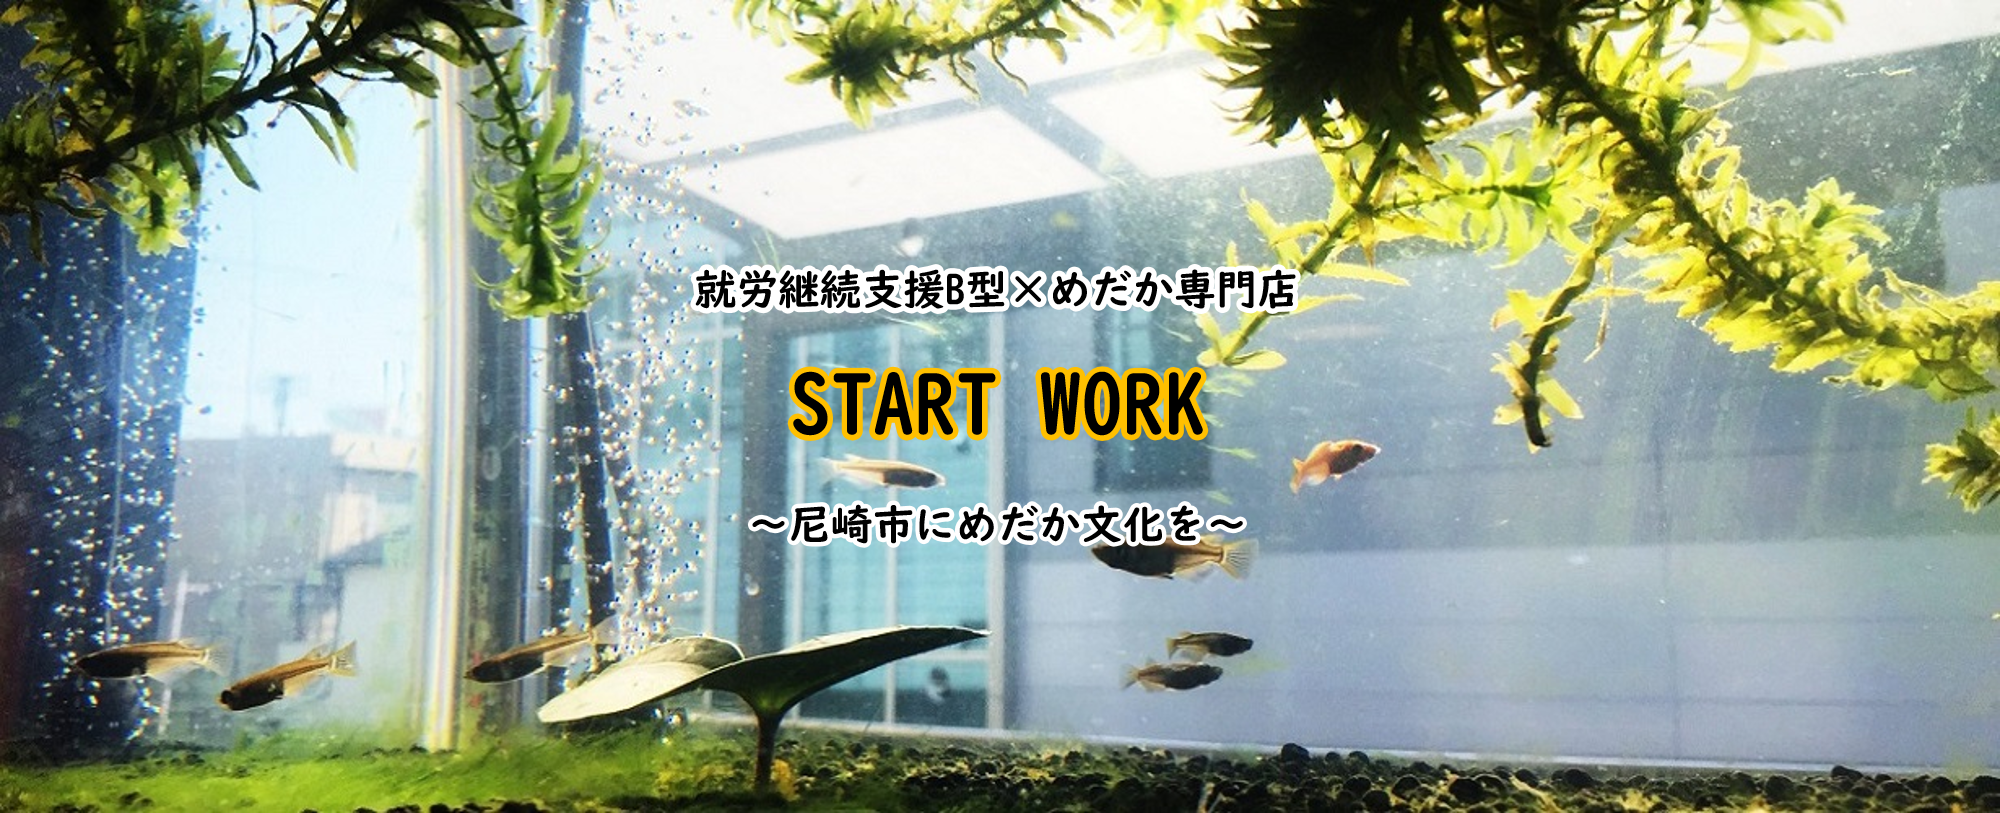 尼崎市の就労継続支援B型 START WORK